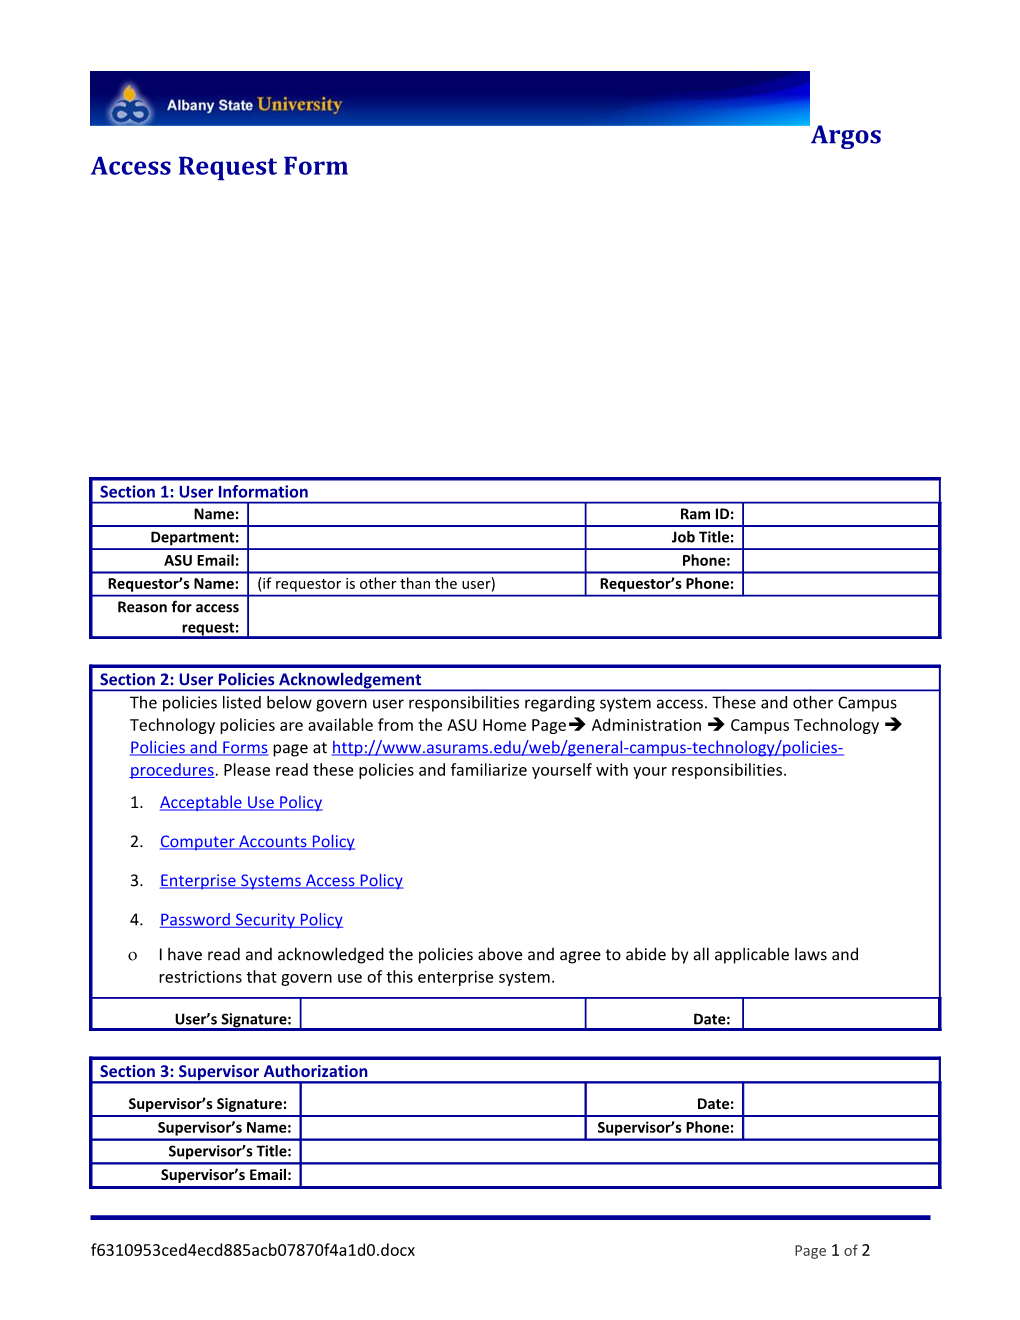 Argos Access Request Form